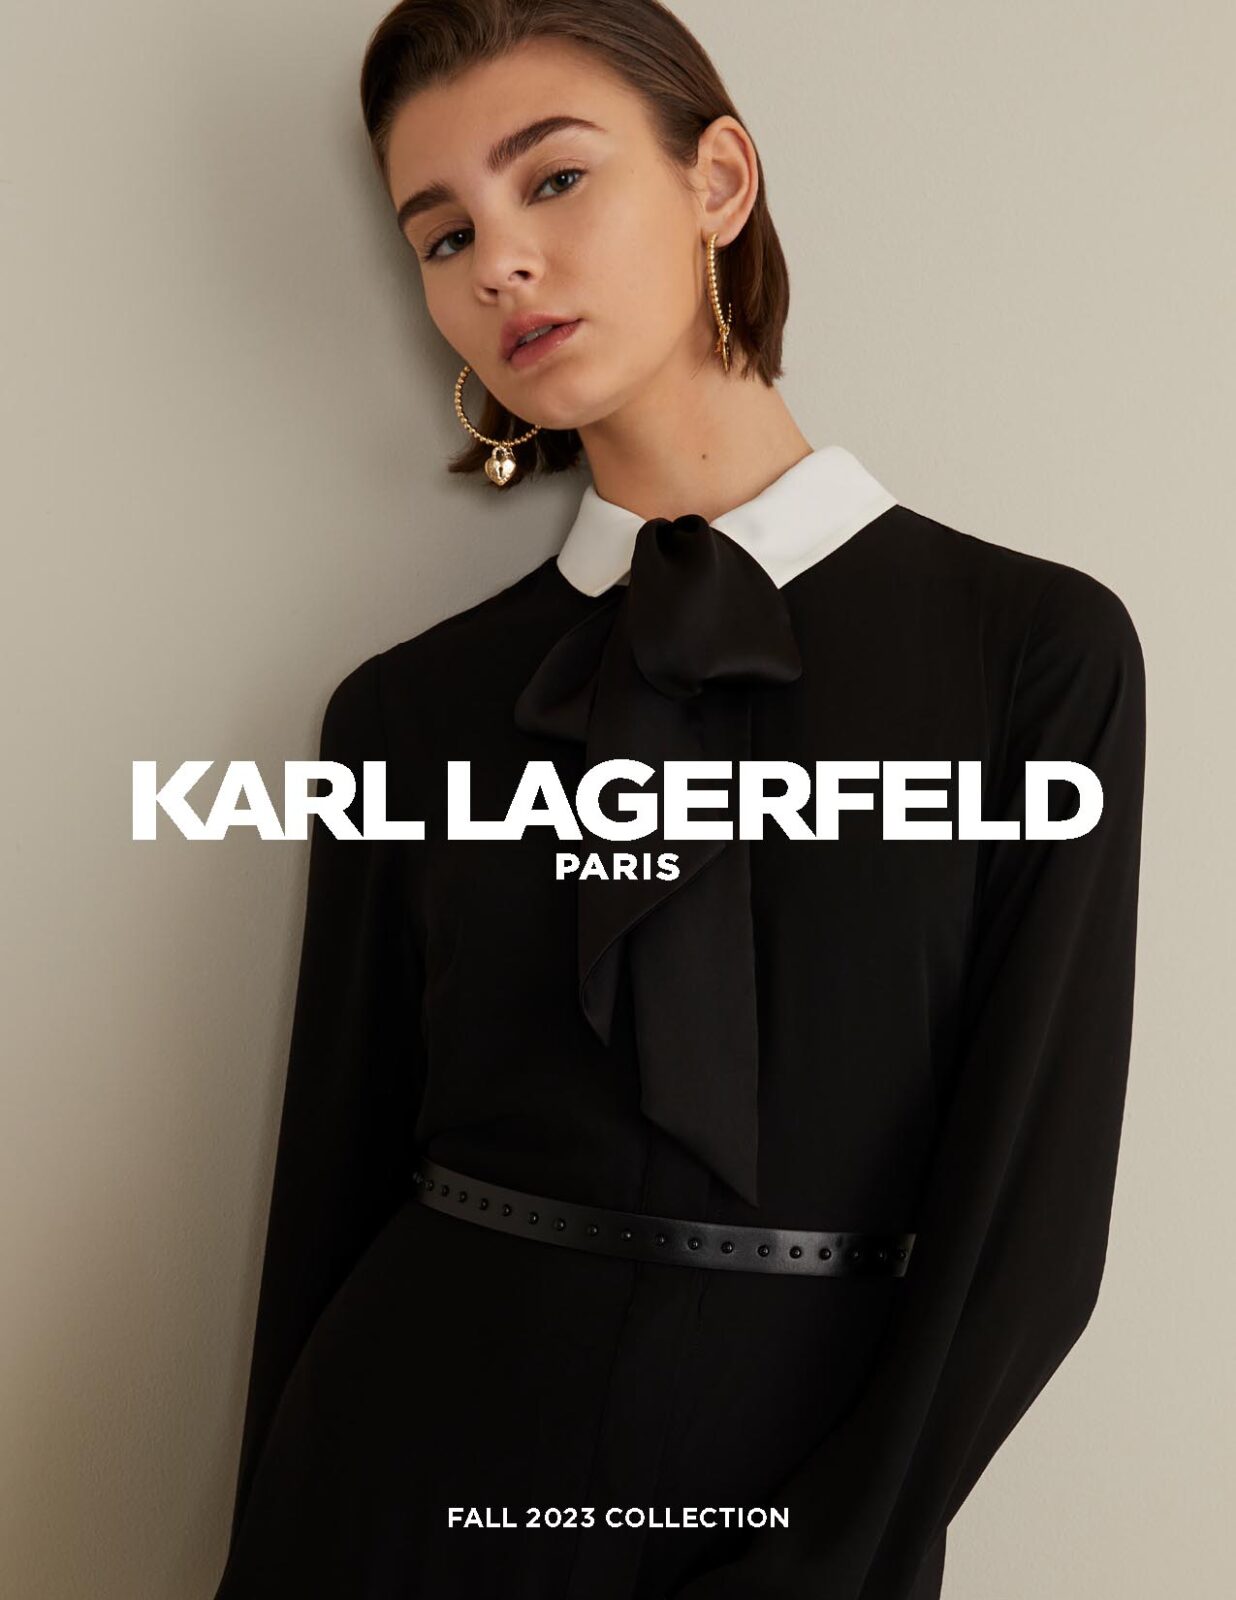 Karl Lagerfeld Paris Fashion Advertising I Greg Sorensen I Fashion & Beauty Photographer I NYC